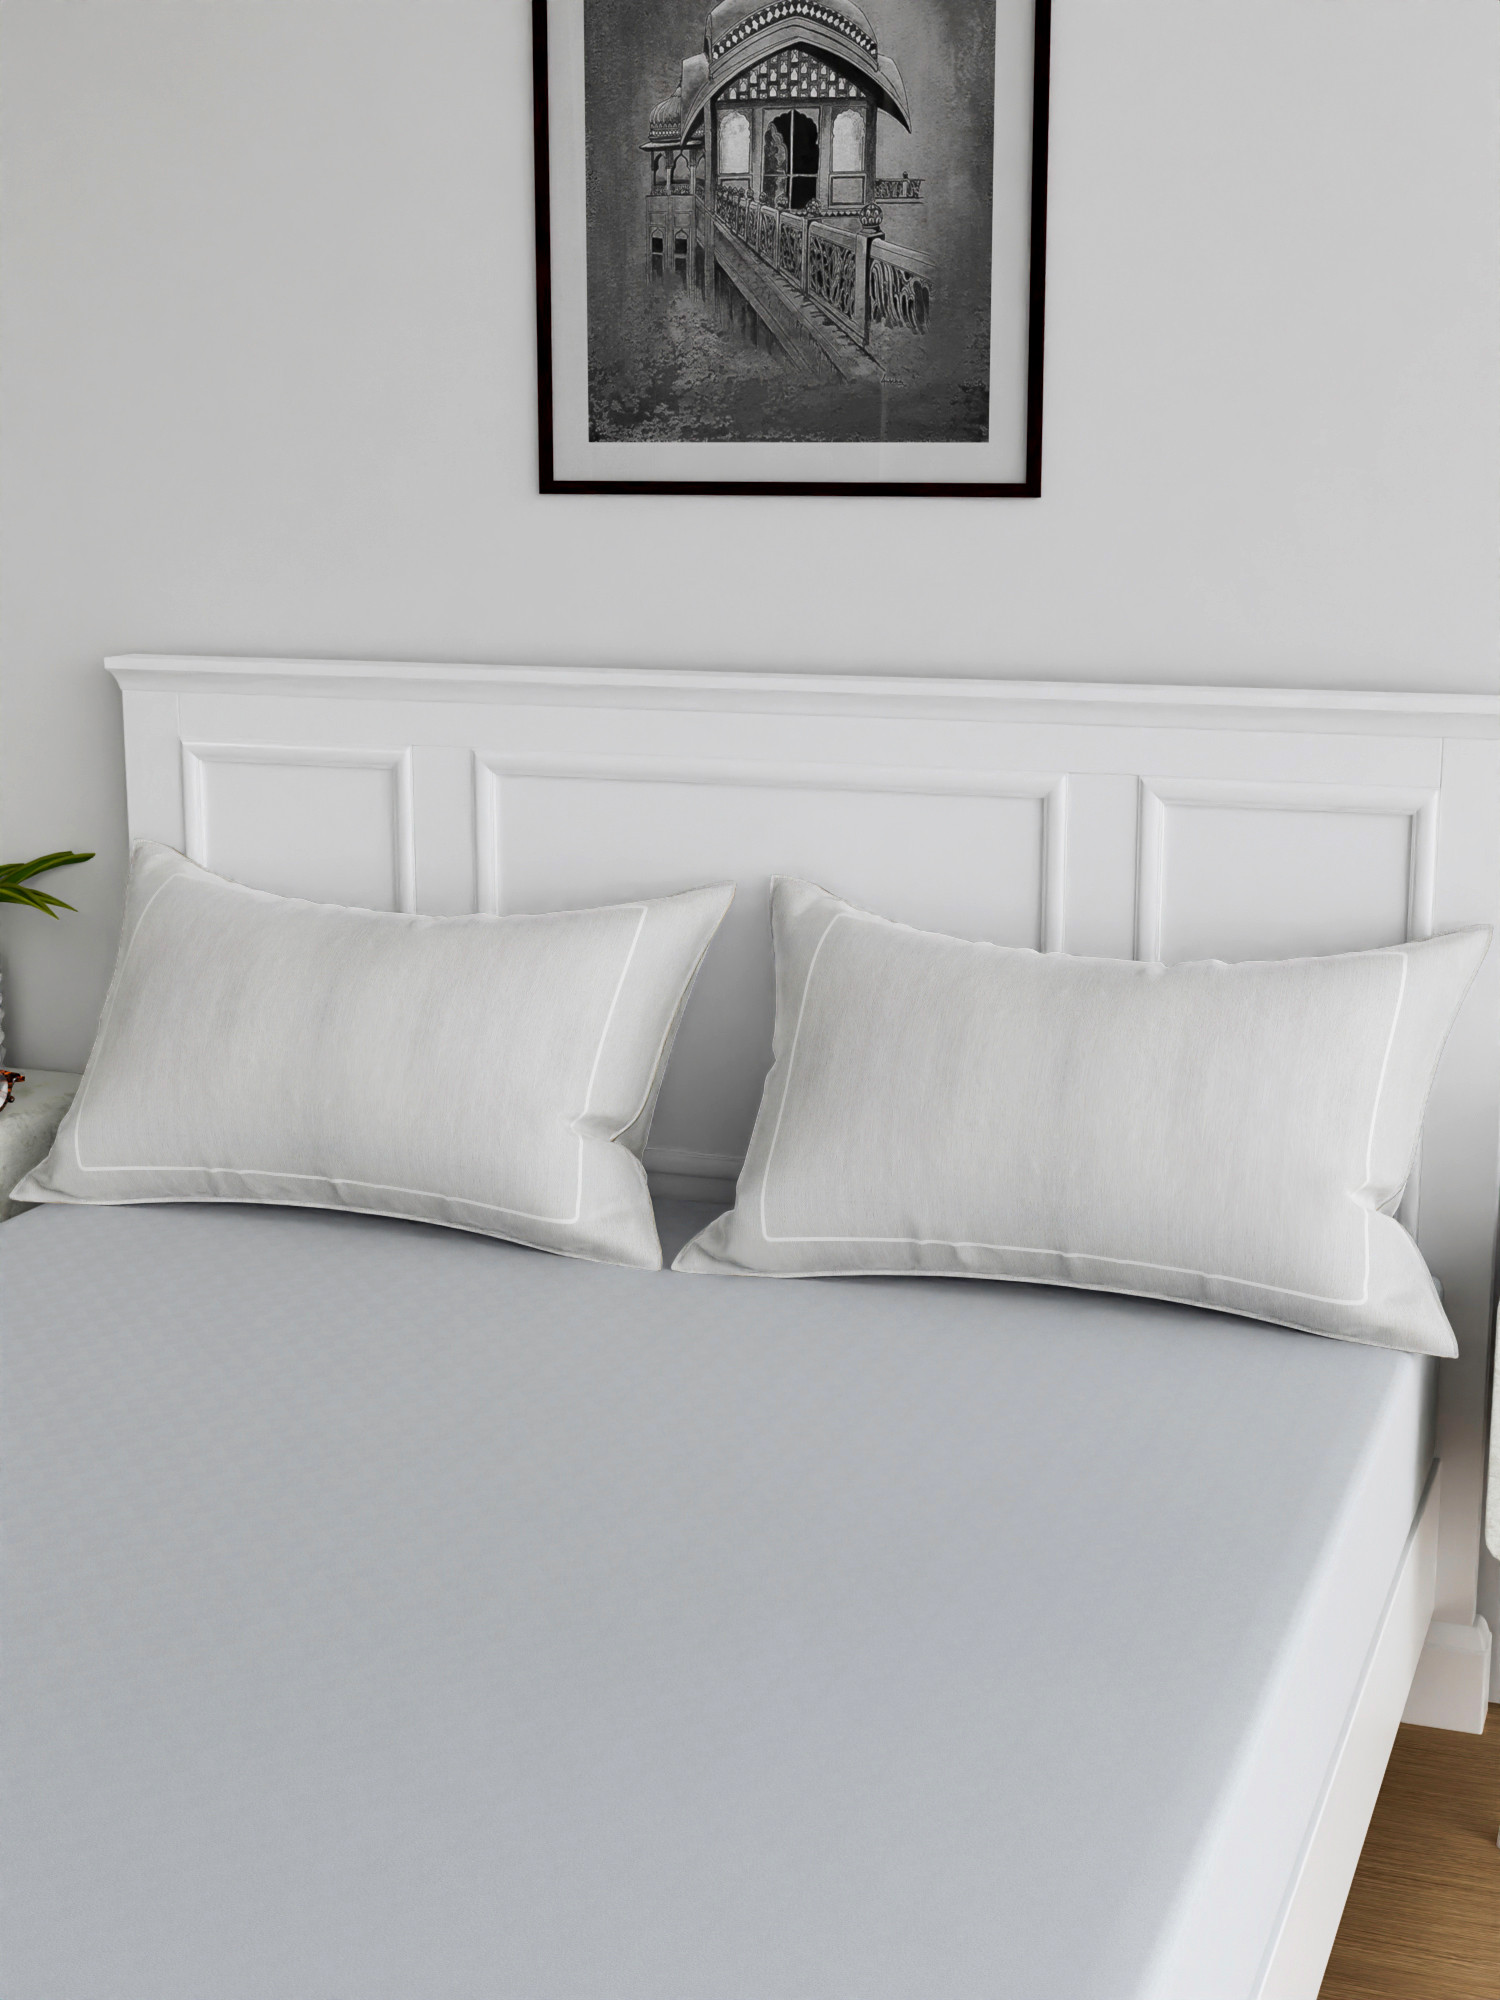 Kuber Industries Pillow Cover | Cotton Pillow Cover | Pillow Cover for Bedroom | Cushion Pillow Cover for Living Room | Plain Border Pillow Cover Set |White